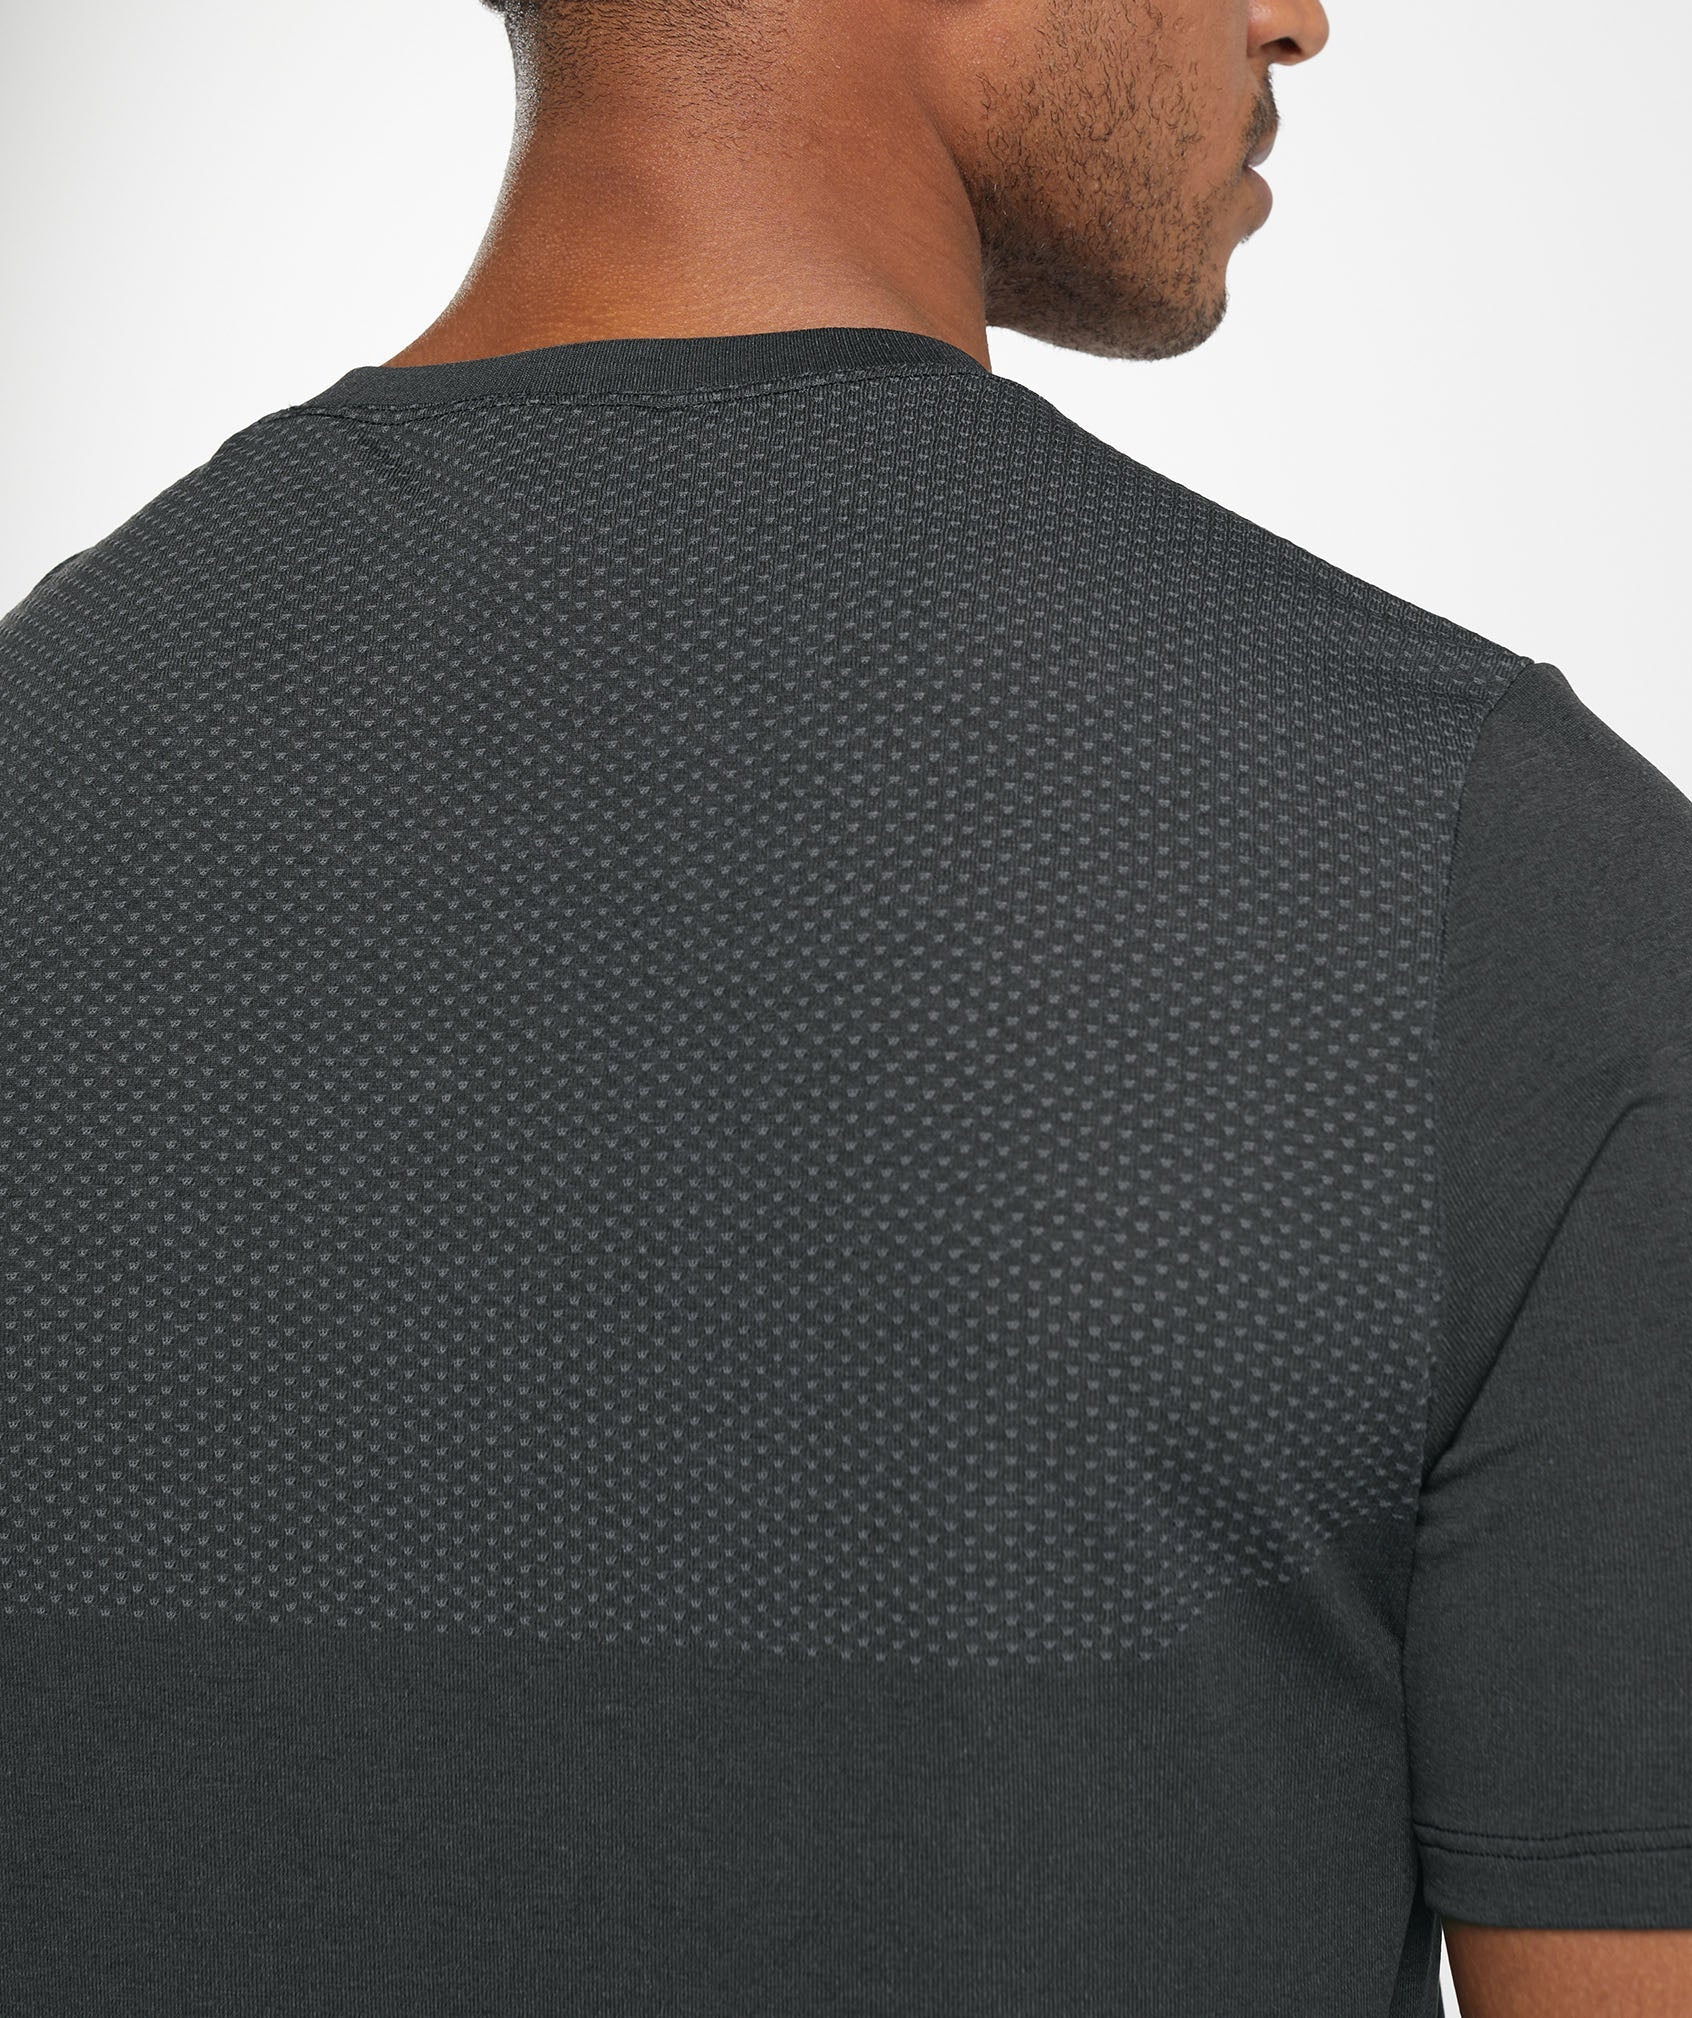 Vital Seamless T-Shirt in Black/Medium Grey Marl - view 6